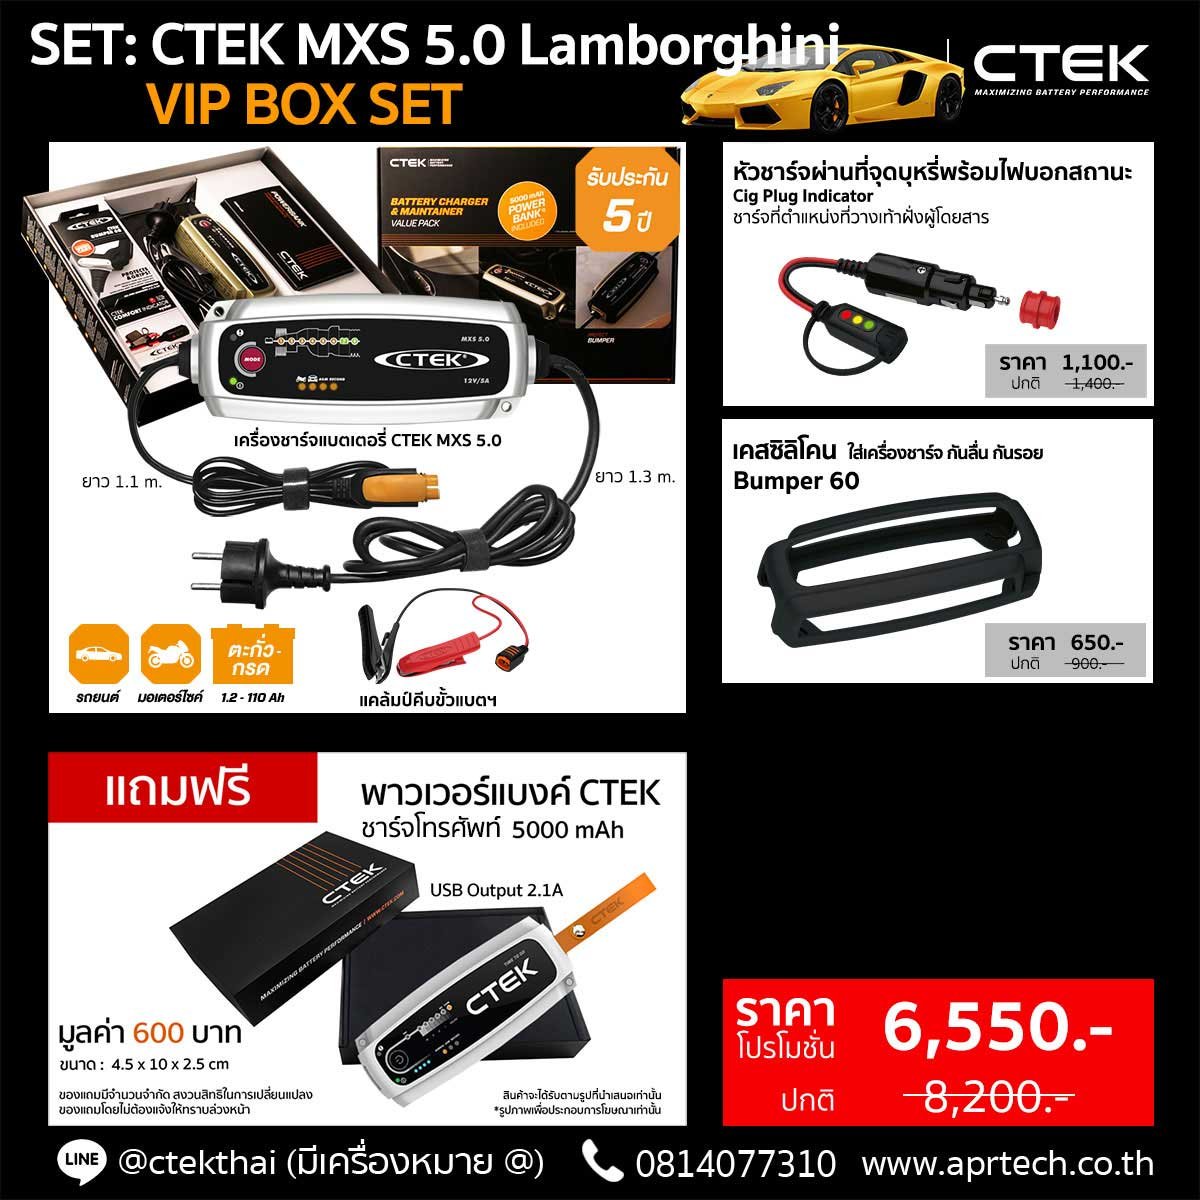 SET CTEK MXS 5.0 Lamborghini VIP BOX SET (CTEK MXS 5.0 + Cig Plug + Bumper)